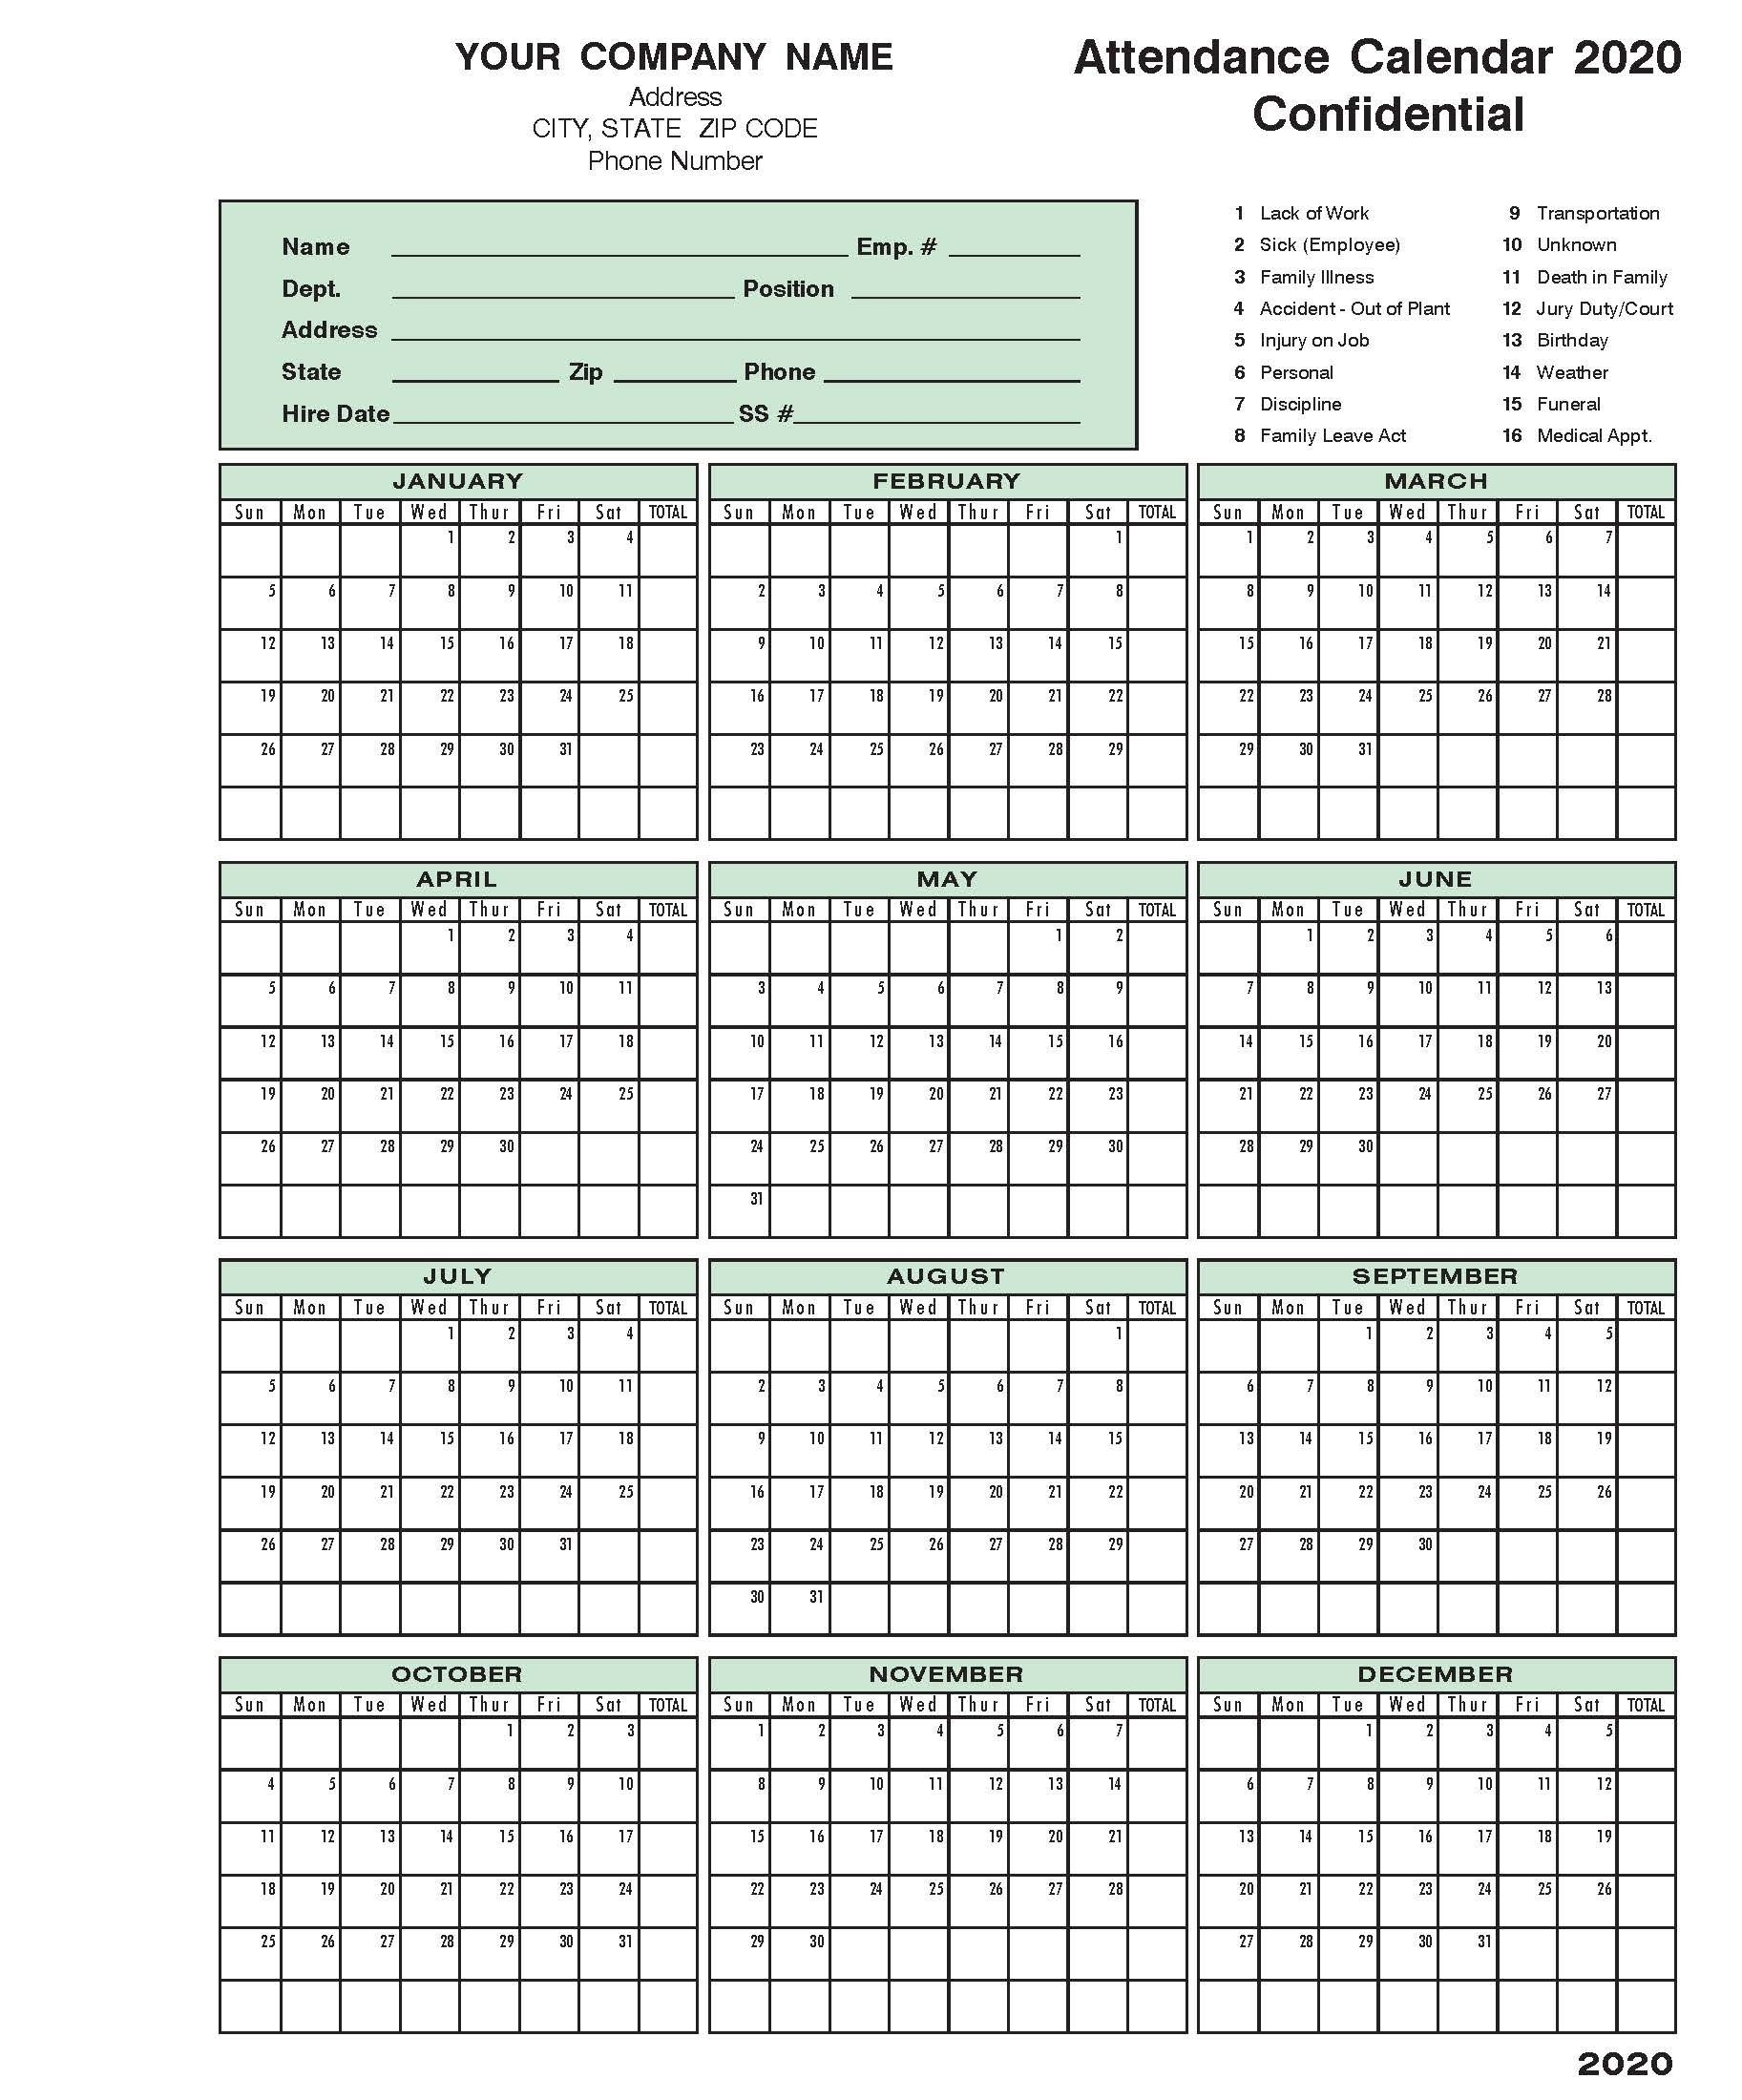 2020 Attendance Calendar In 2020 | Calendar 2020, Excel within Employee Attendance Calendar 2020 Printable